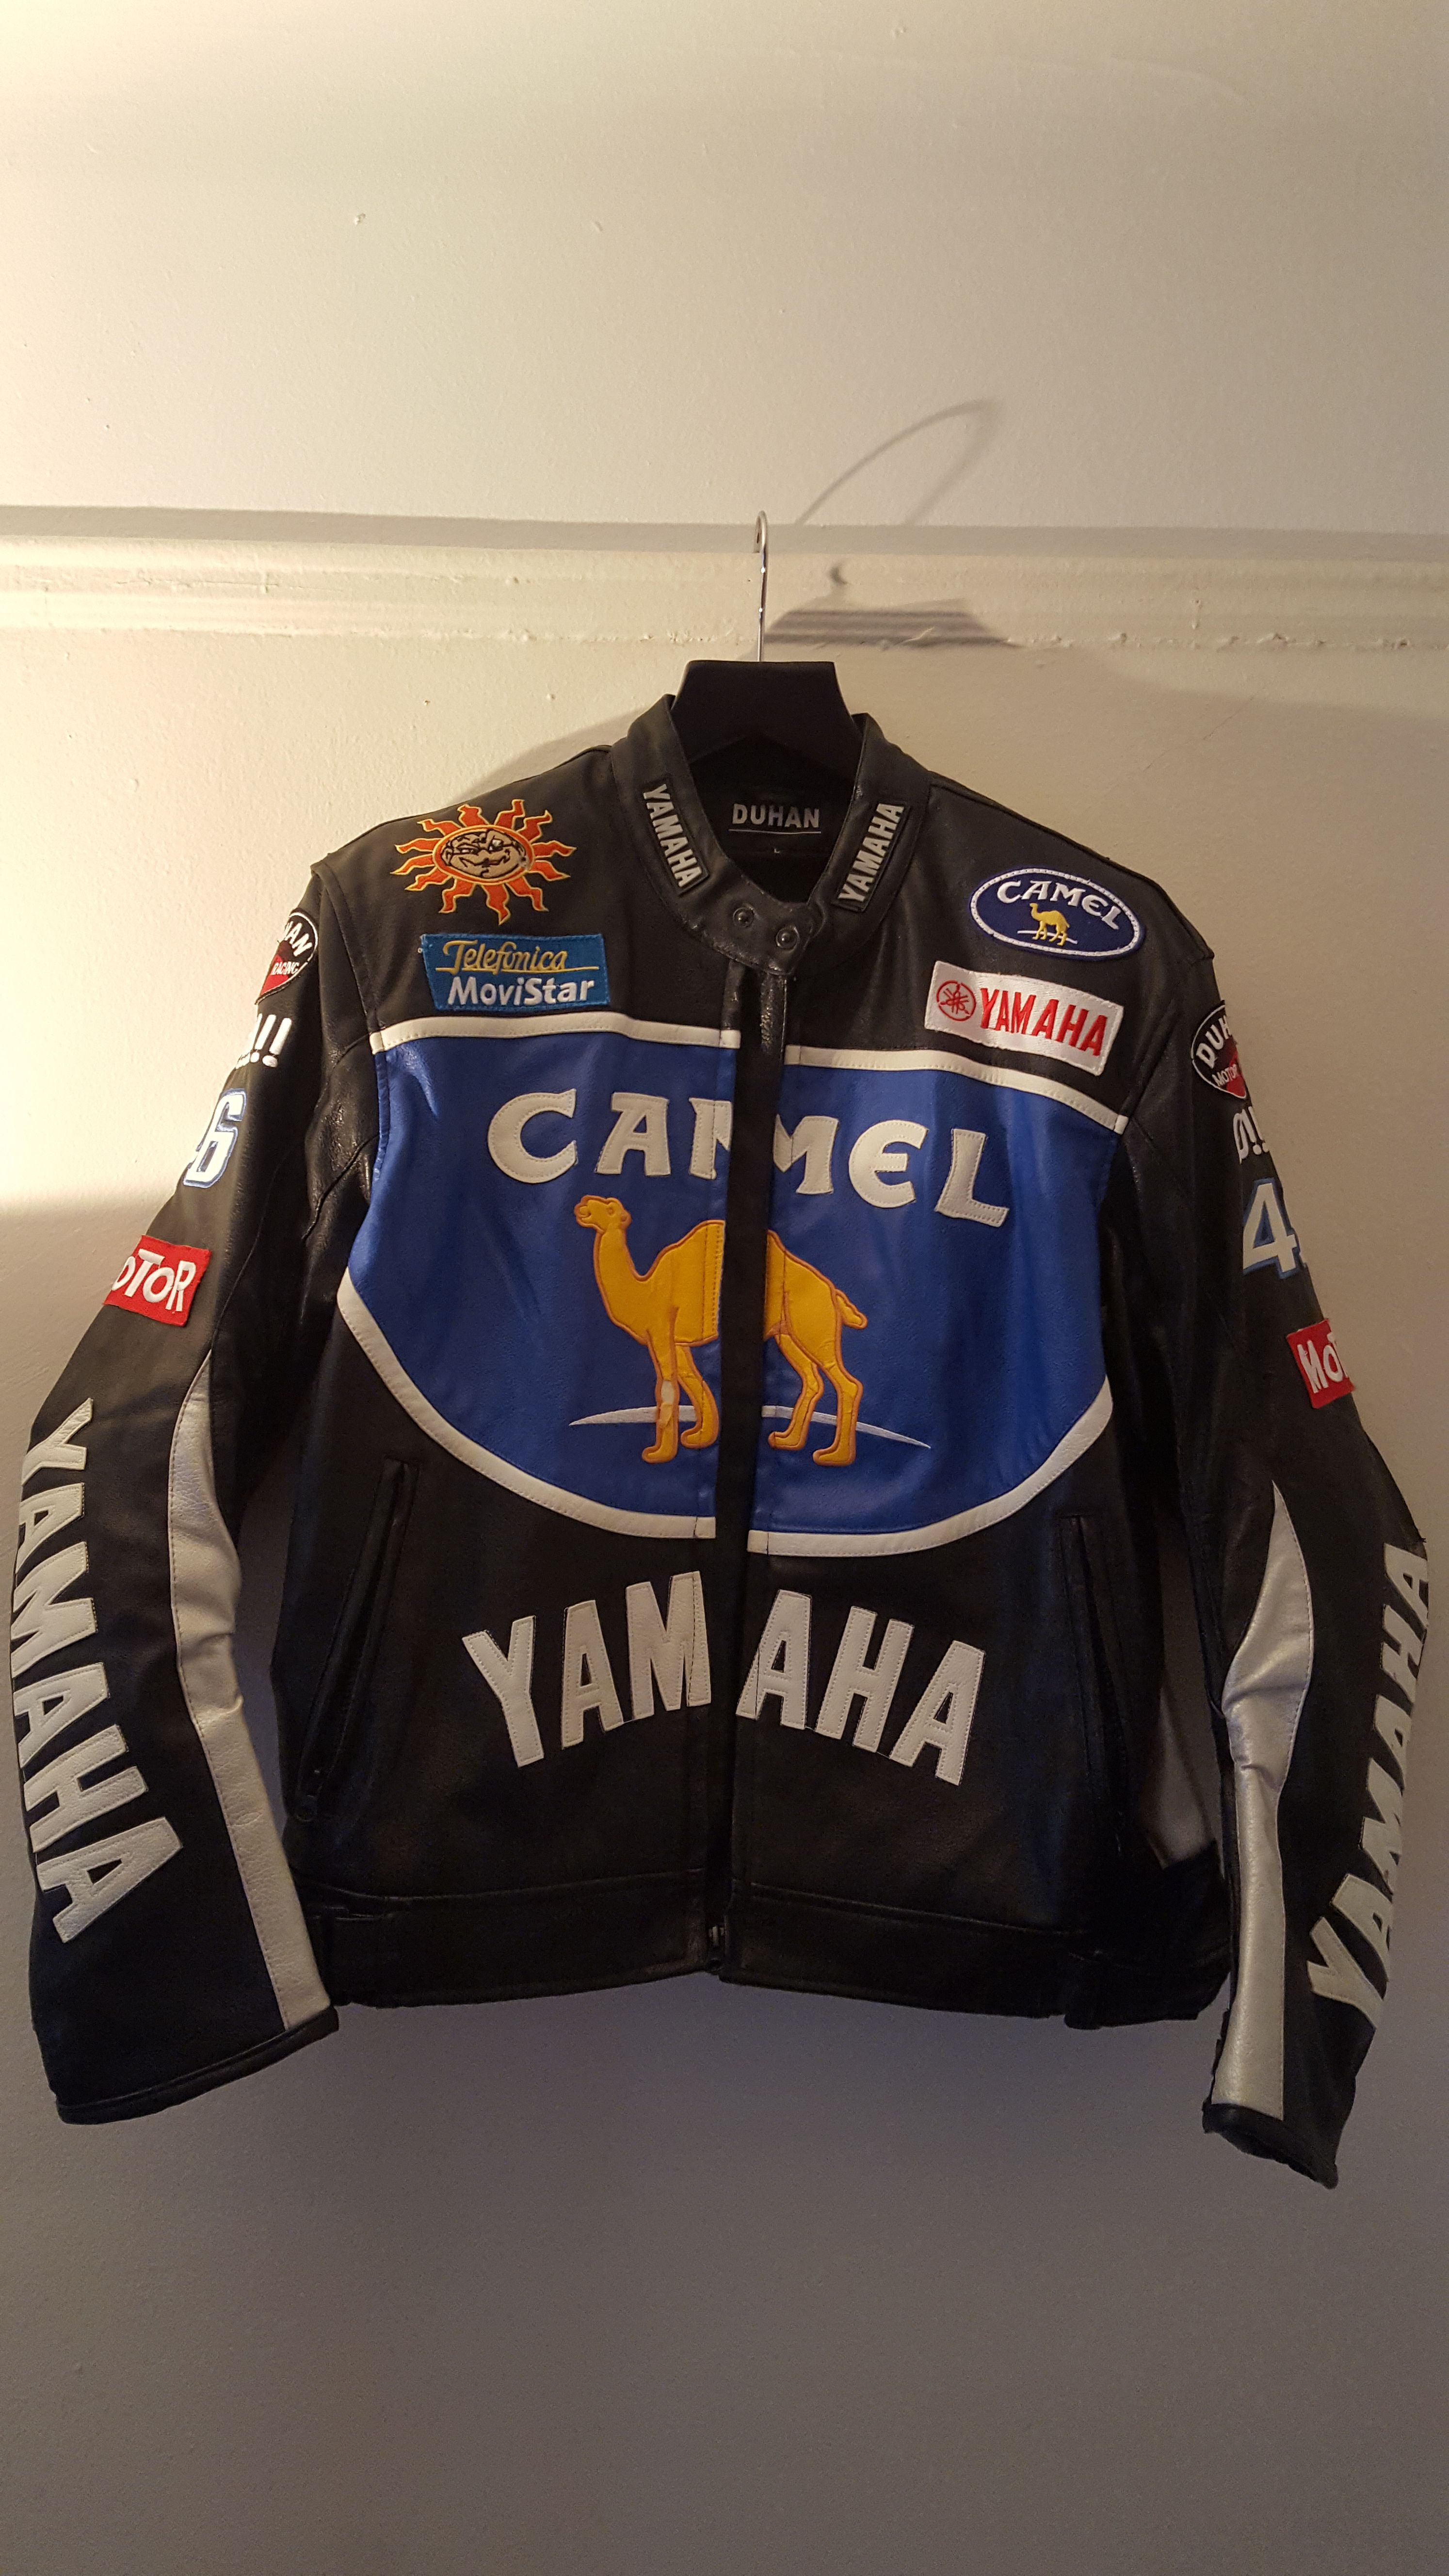 Moto GP Motorcycle Duhan Yamaha Racing Leather Jacket size L